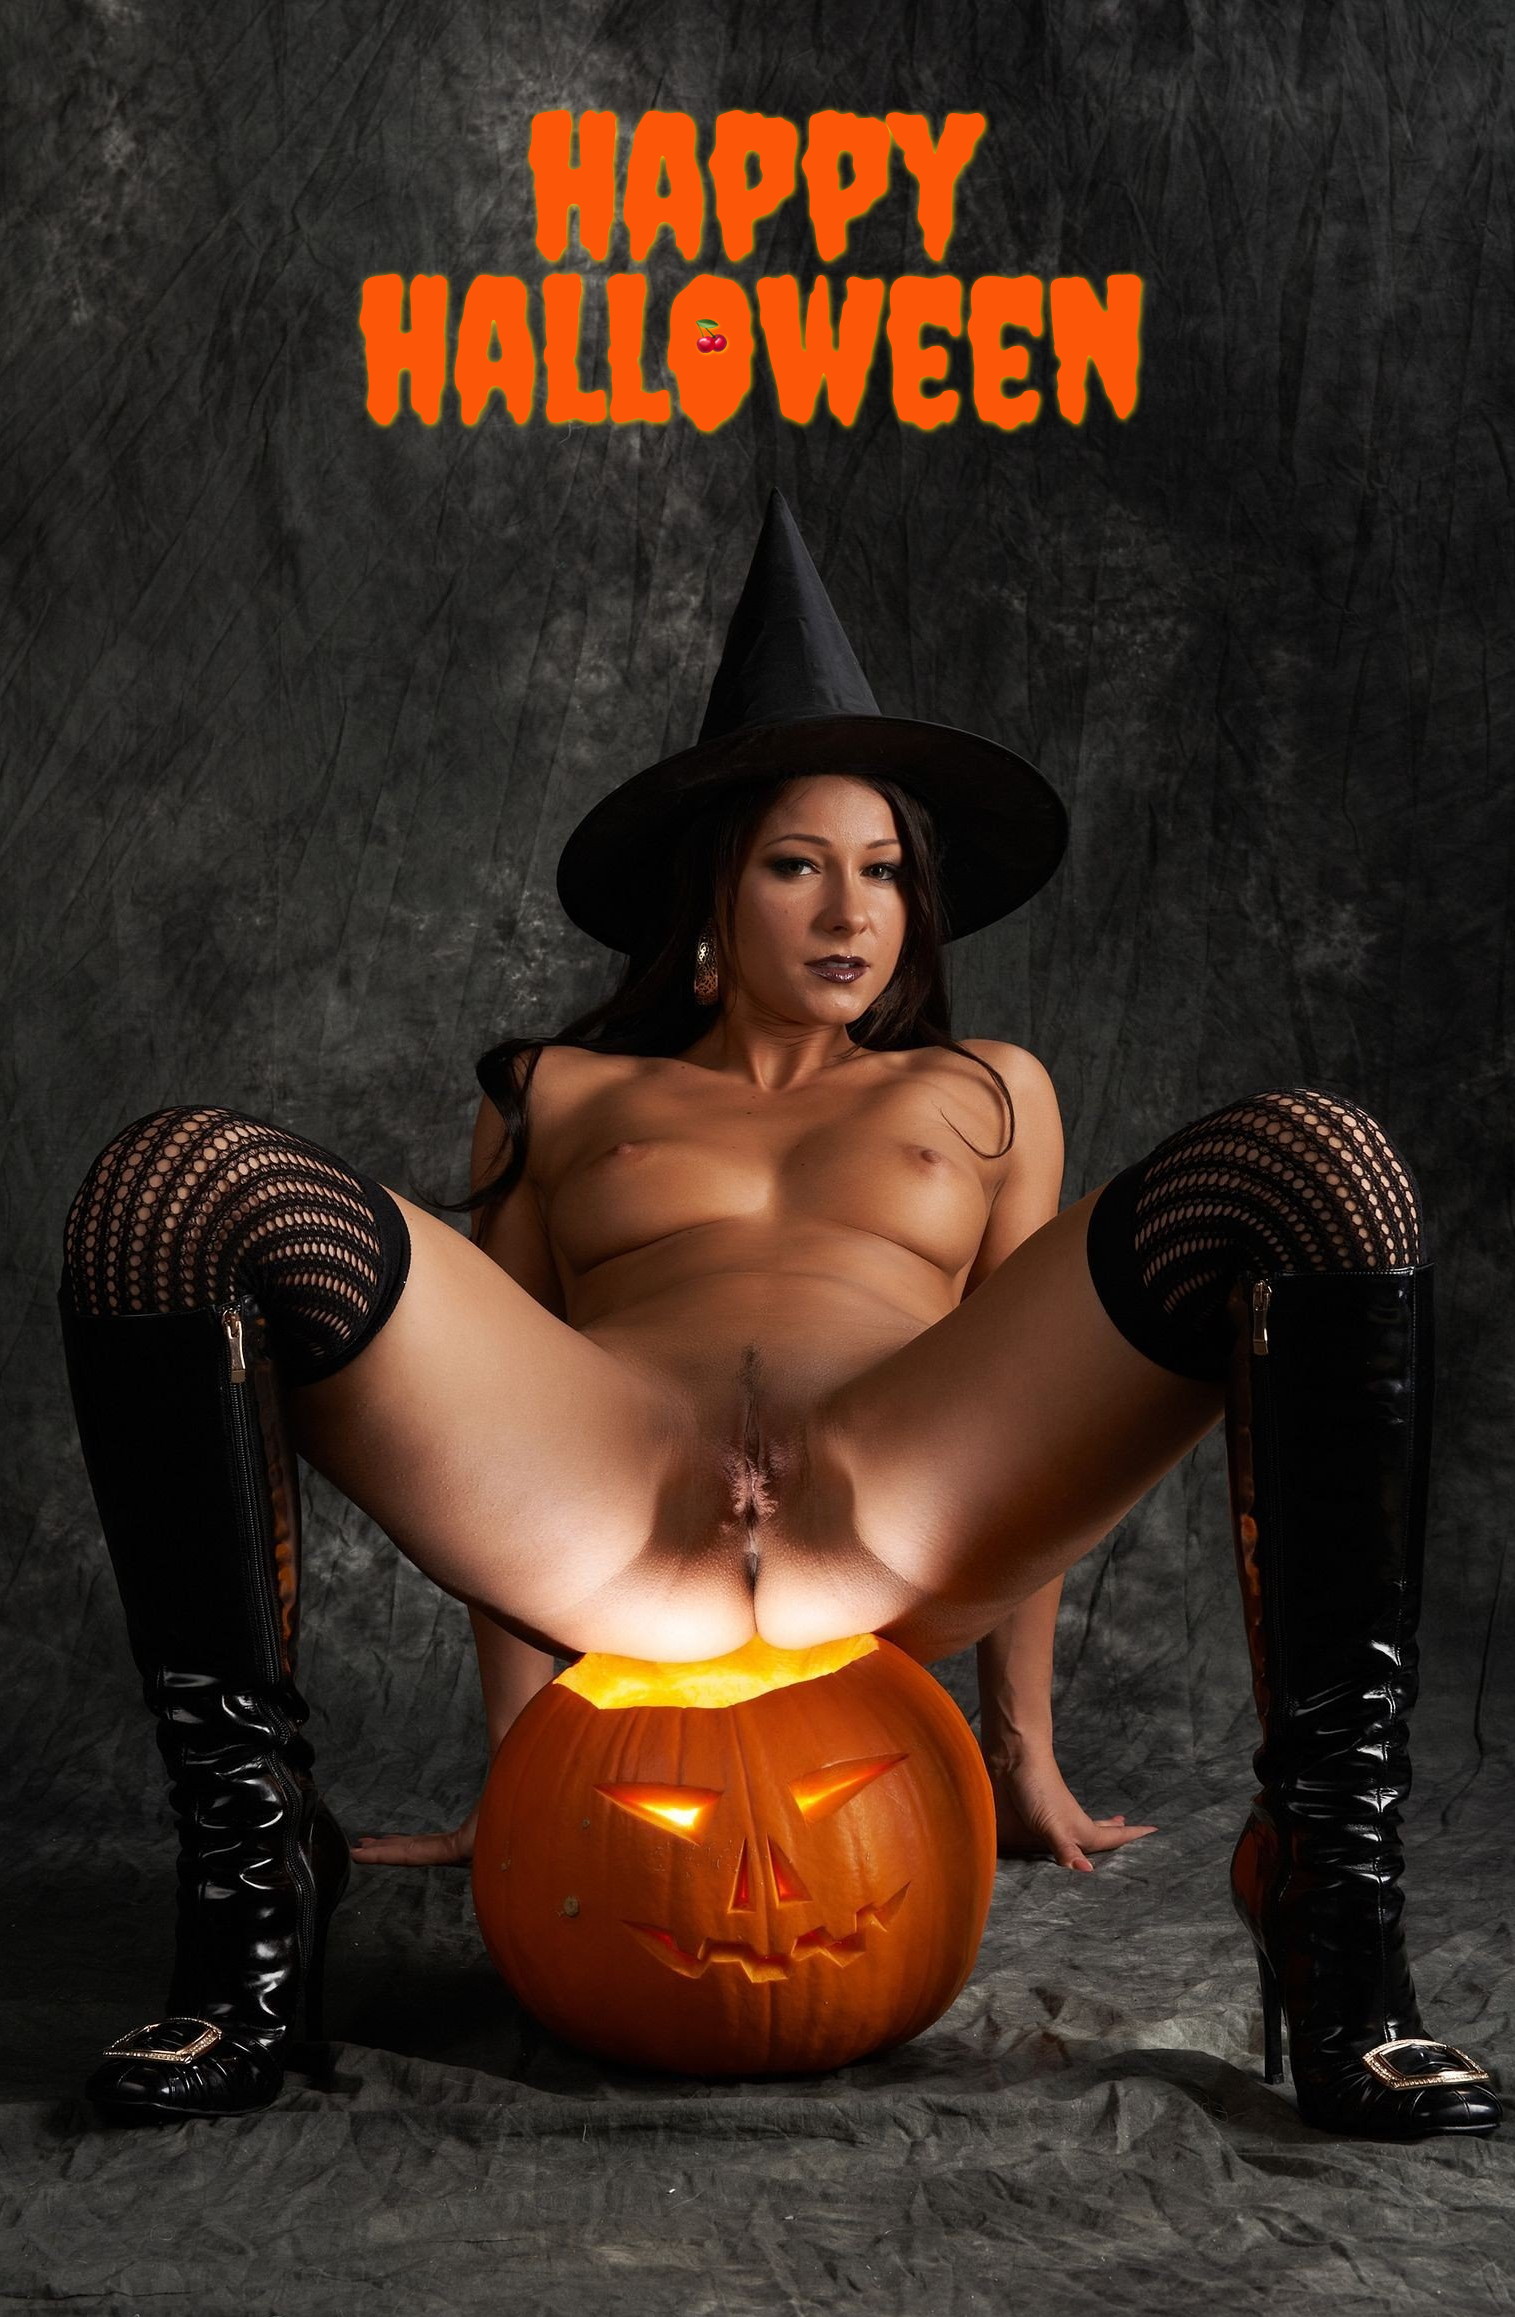 Happy Halloween | SexPin.net â€“ Free Porn Pics and Sex Videos